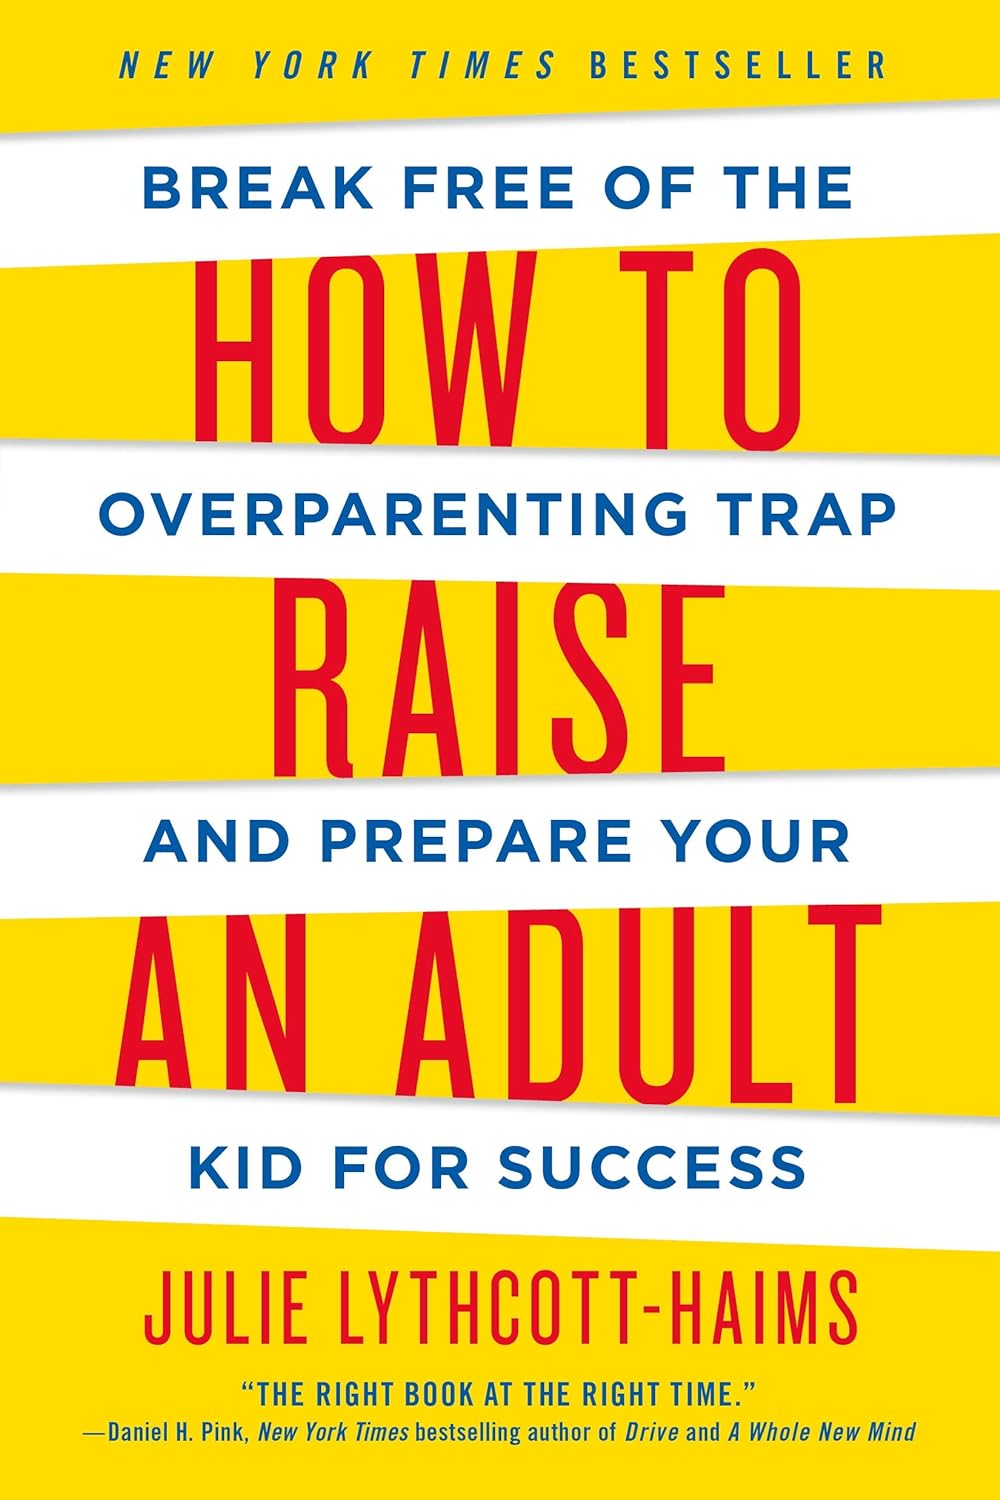 How to Raise an Adult by Julie Lythcott-Haims